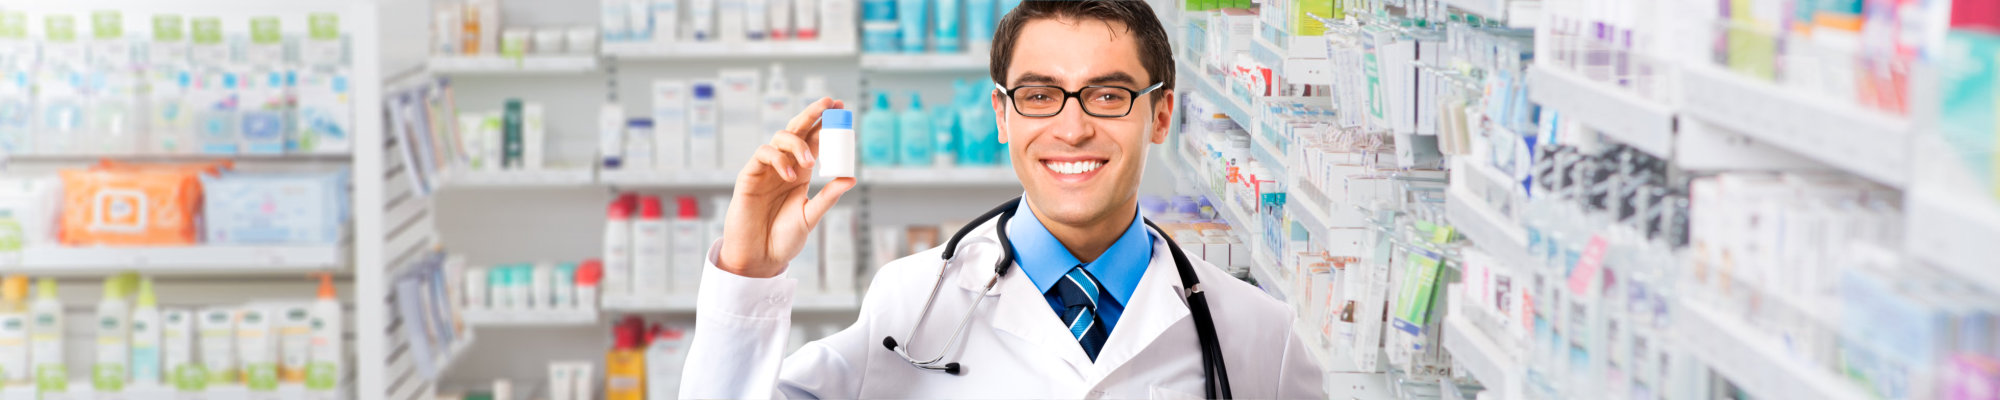 Male pharmacist smiling